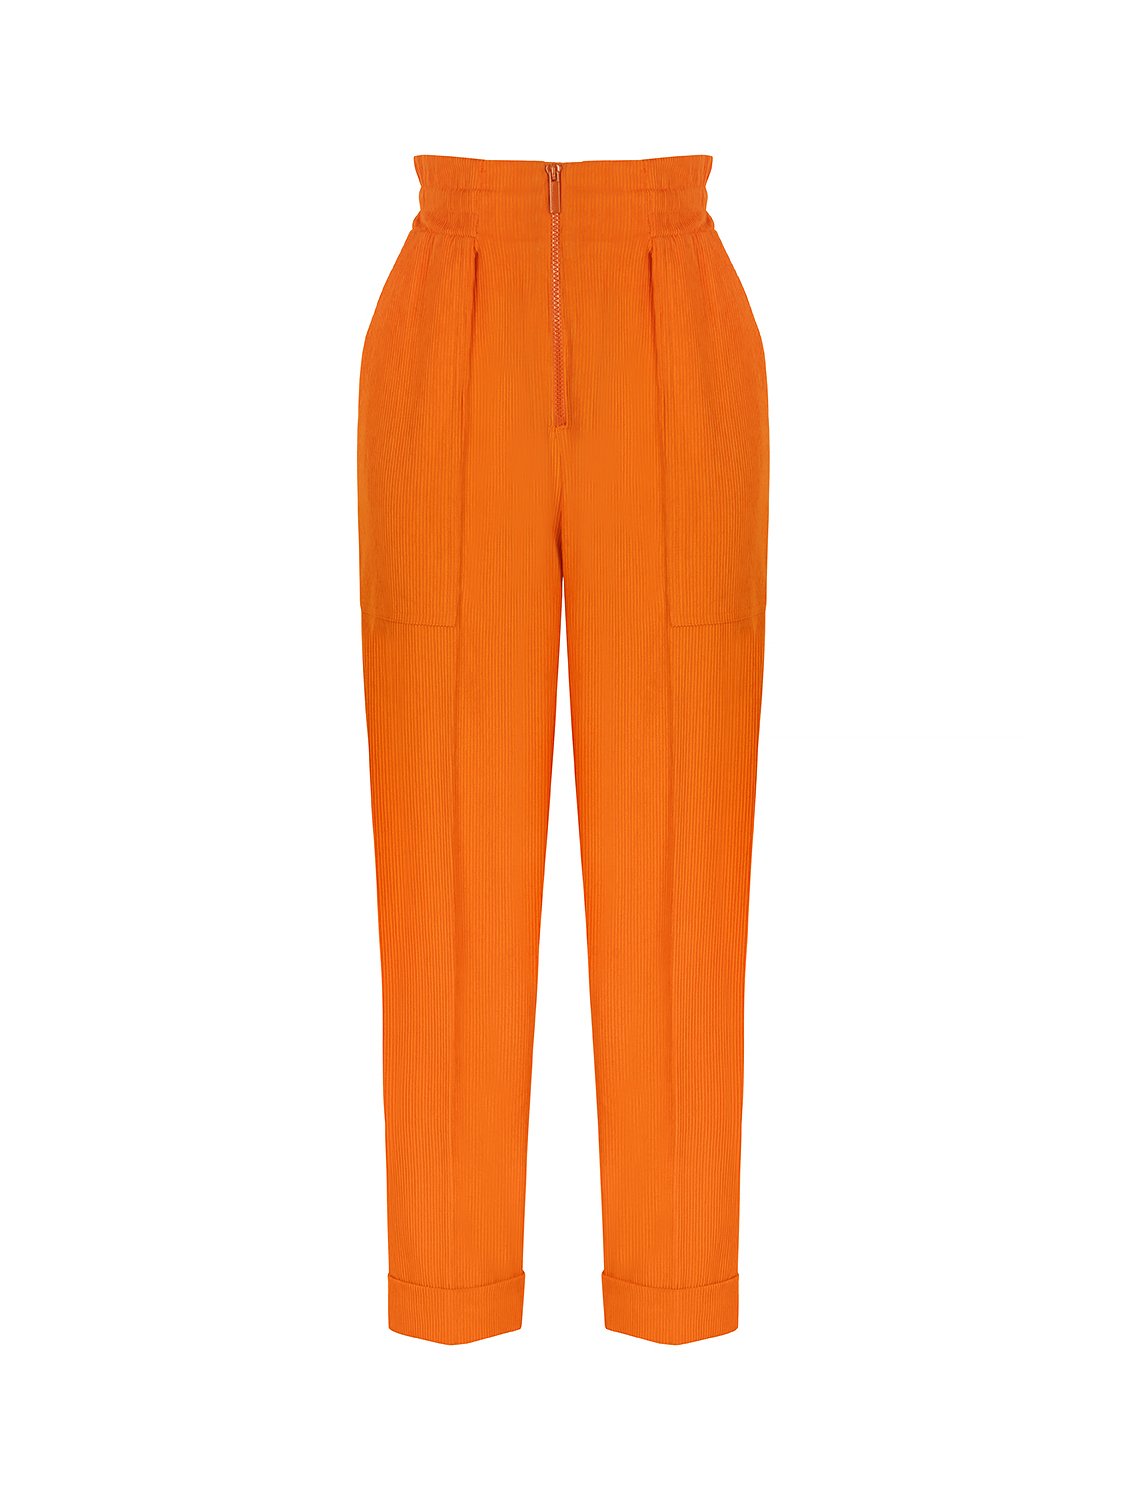 Nocturne Women's Yellow / Orange  Cuffed Corduroy Pants